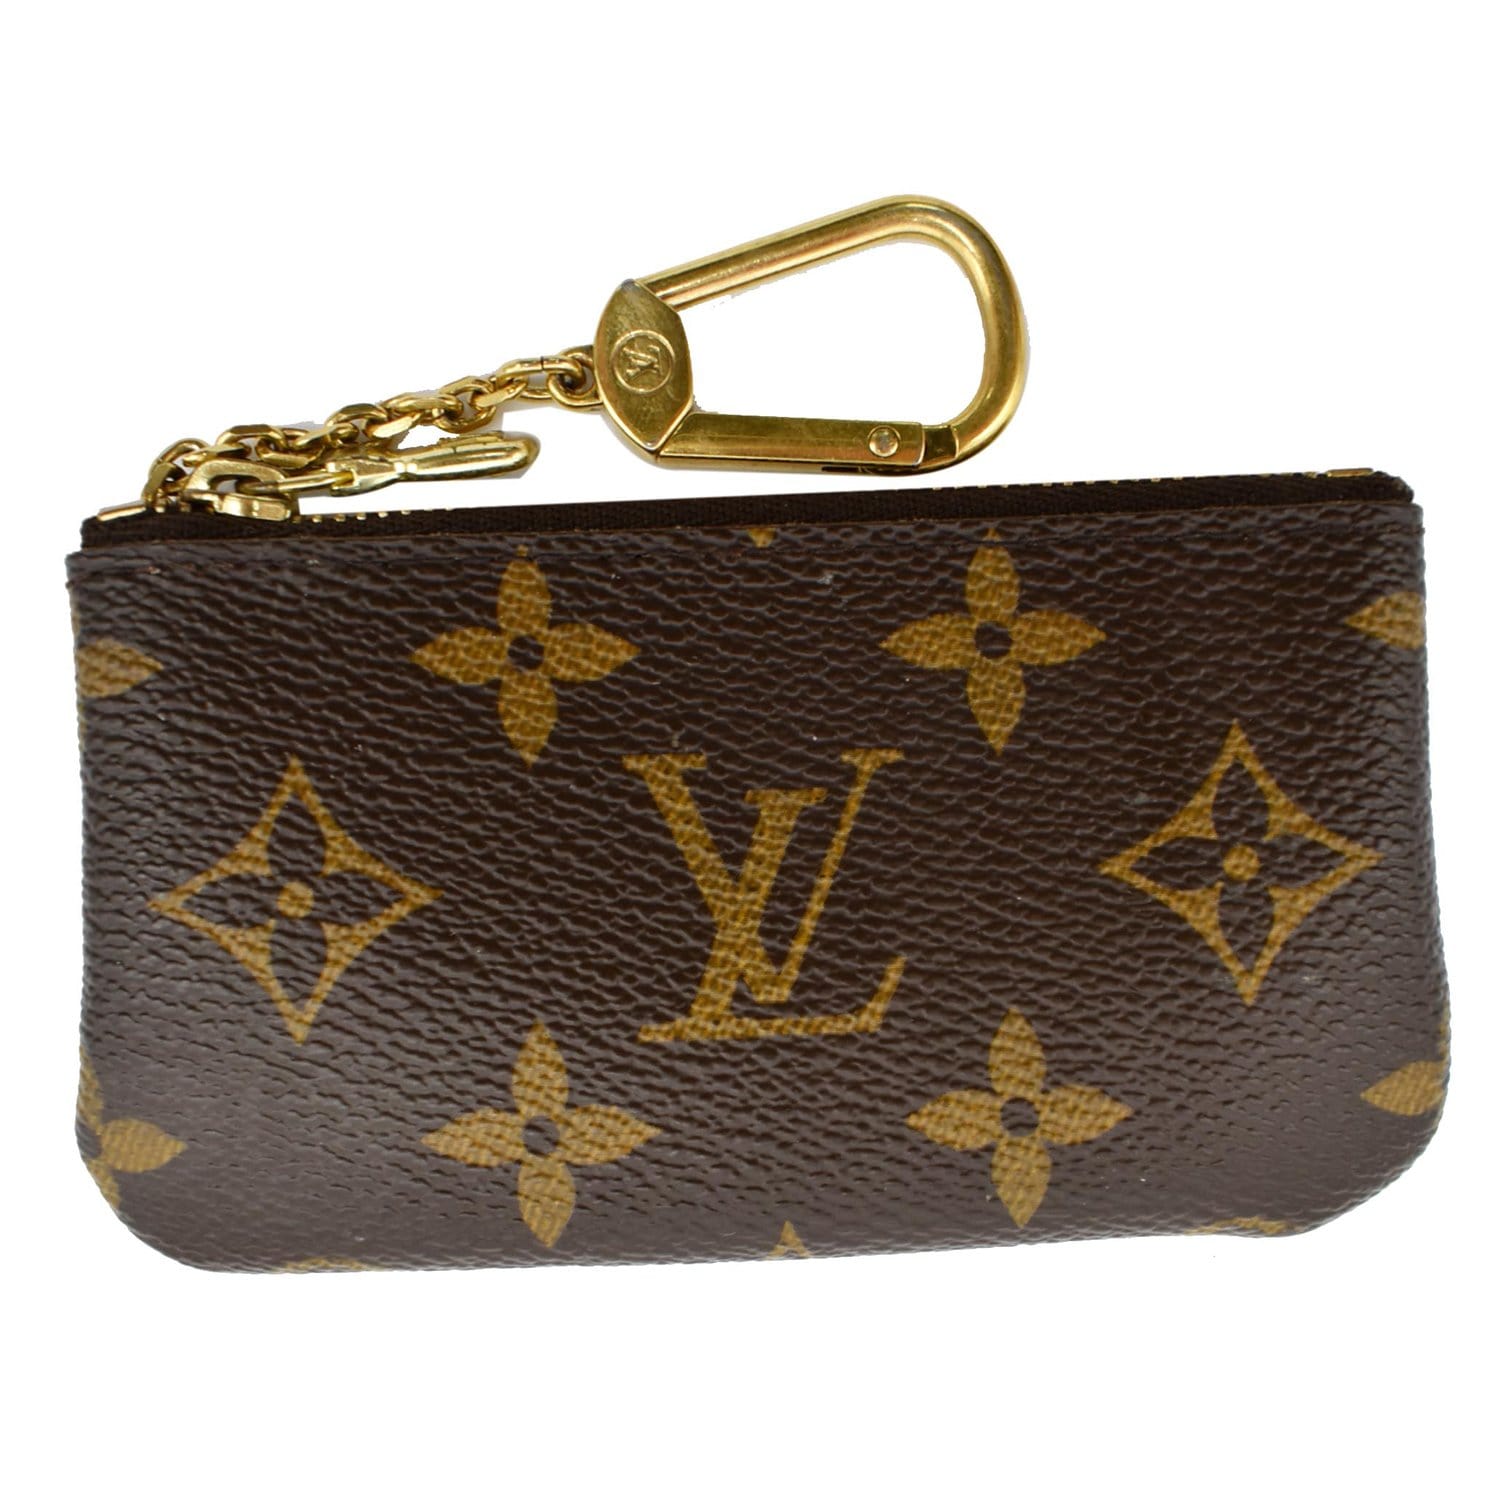 Louis Vuitton Monogram Canvas Key Pouch, Key Ring, handbag coin